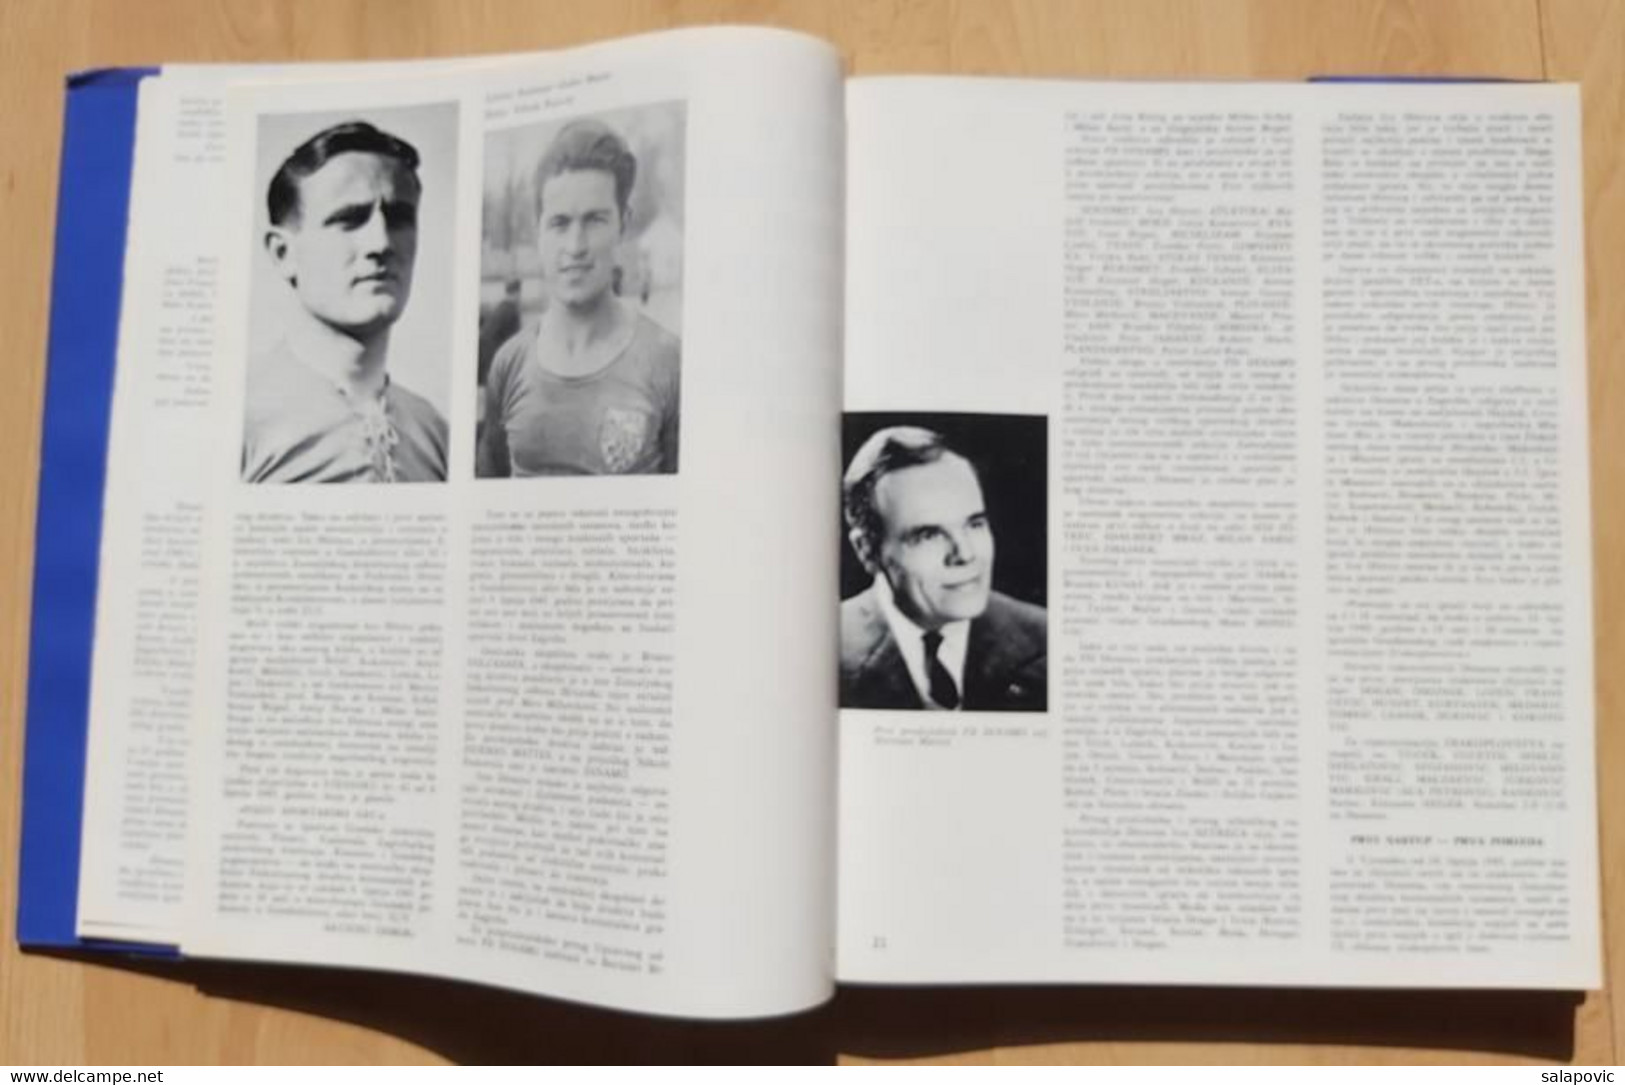 DINAMO ZAGREB 1945-1975 Fredi Kramera, Roman Garber, Zvonimir Magdić Monografija Football Club Croatia, Monograph - Bücher